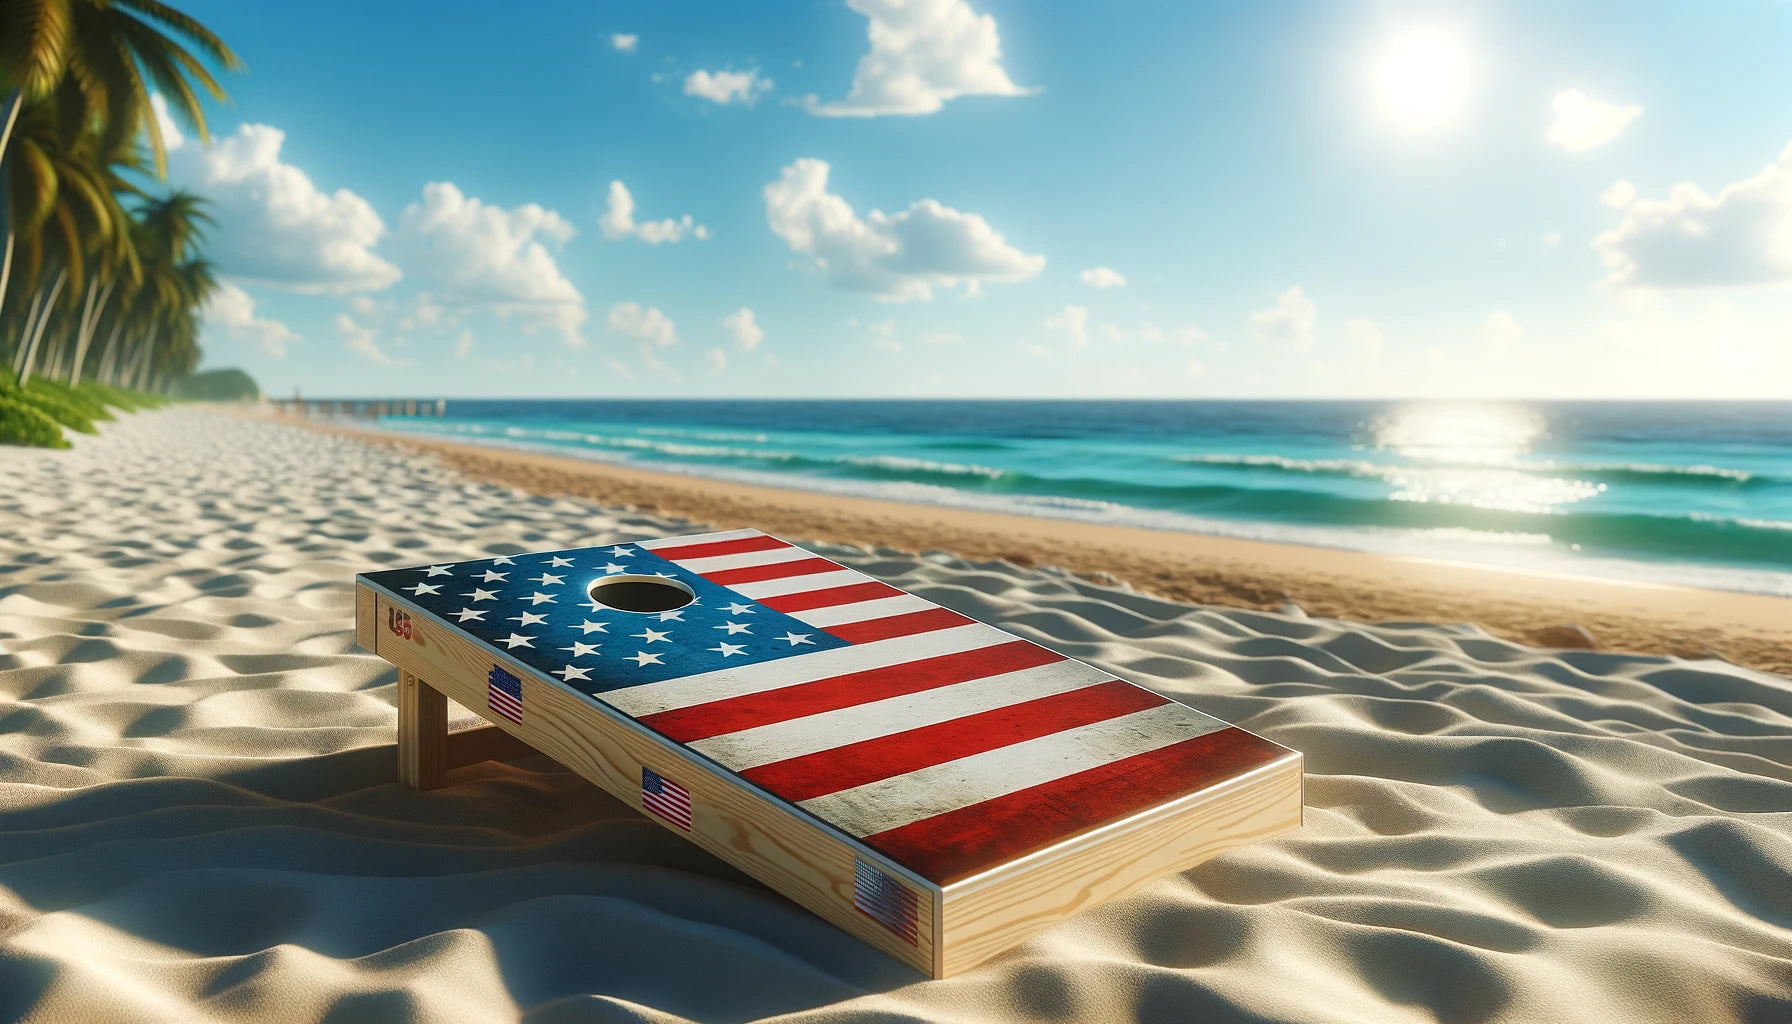 Cornhole board with U.S. flag designs on a beach